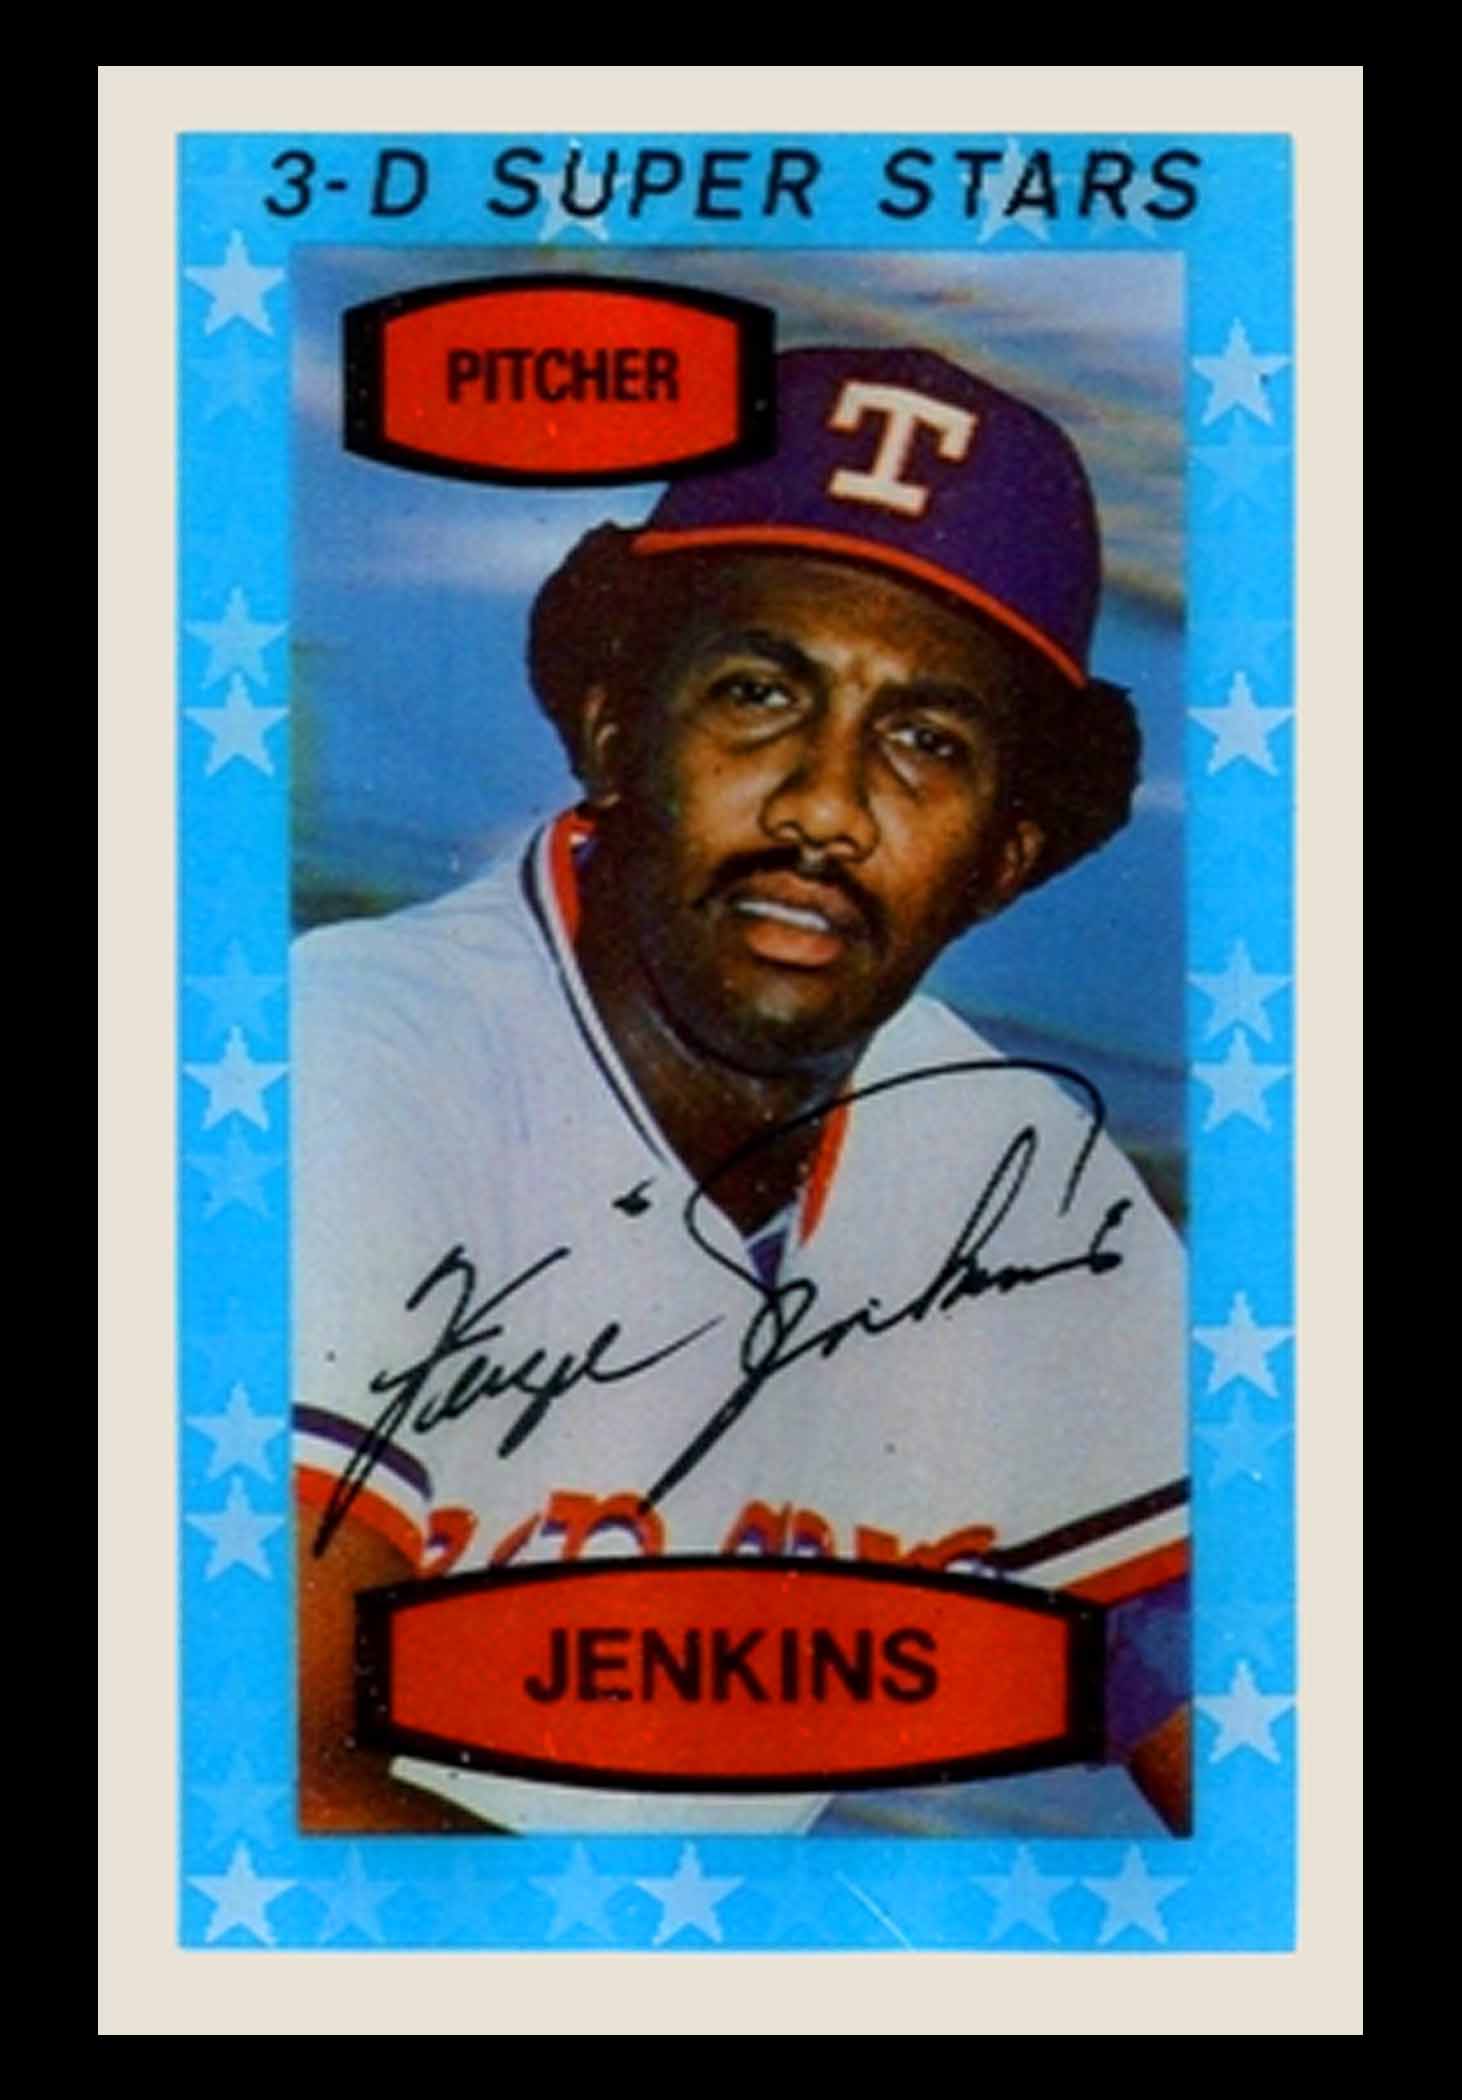 1979 Topps - Ferguson Fergie Jenkins #544 (Pitcher) (Hal…